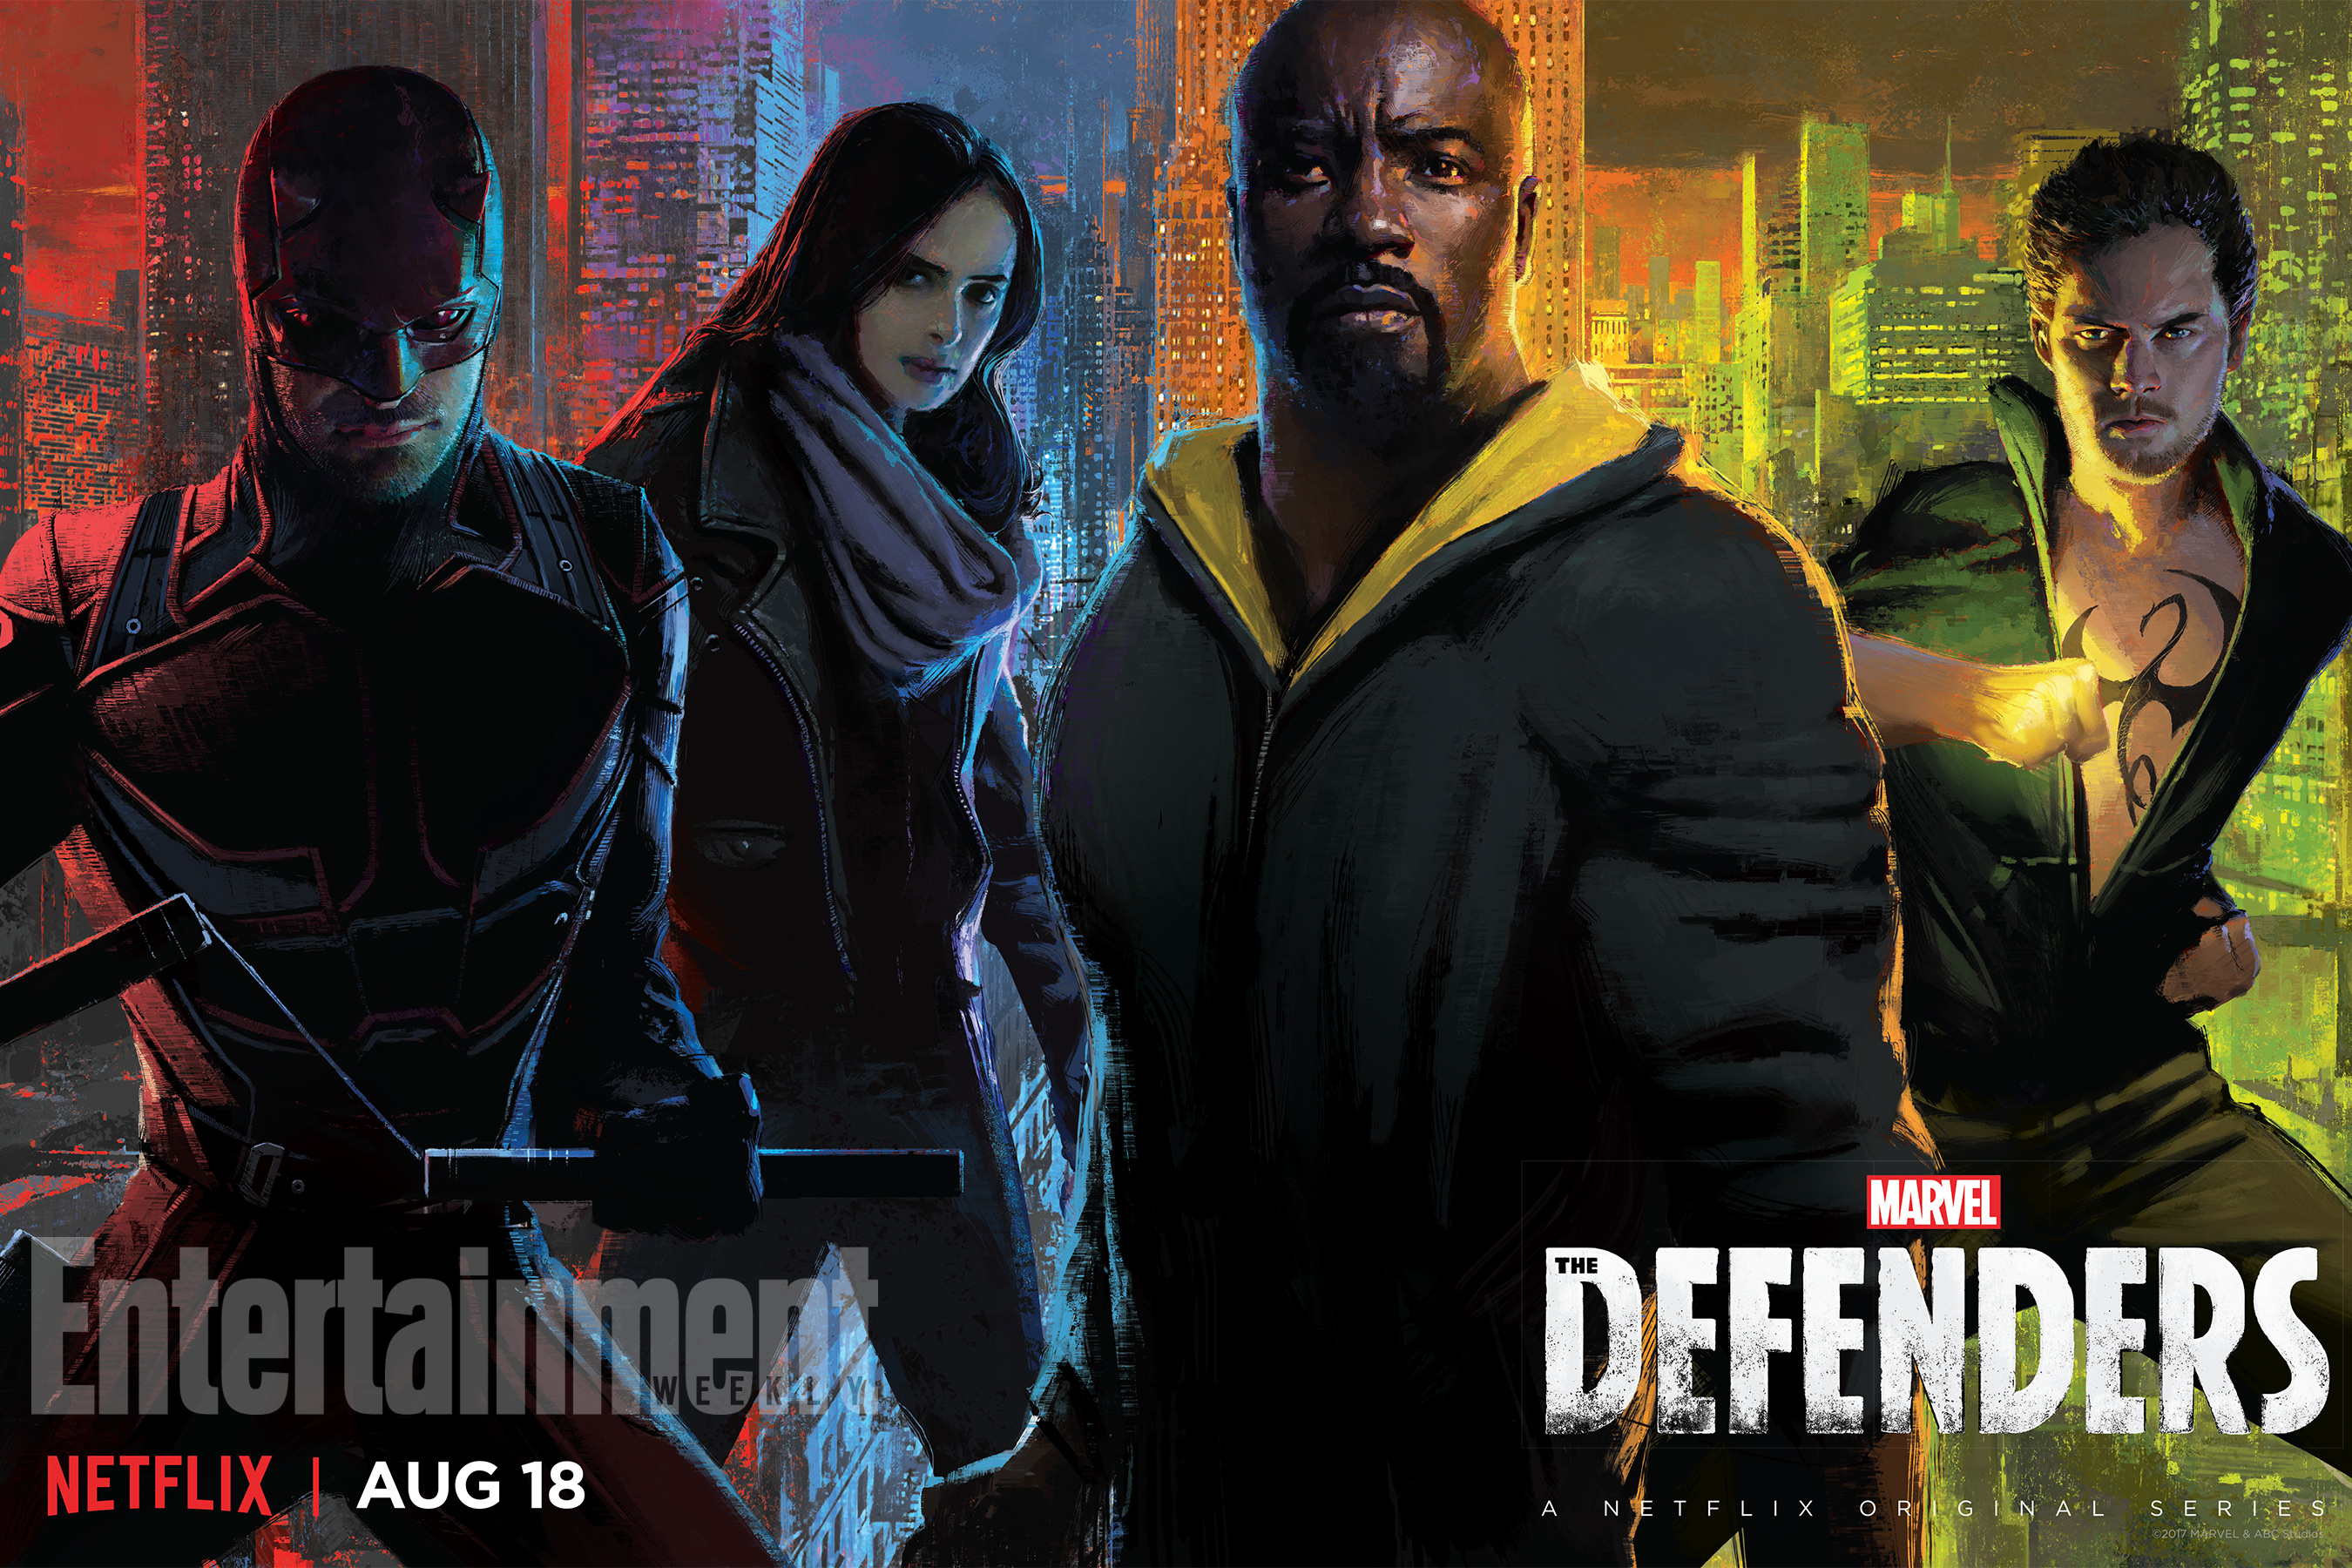 Marvel The Defenders Poster - HD Wallpaper 